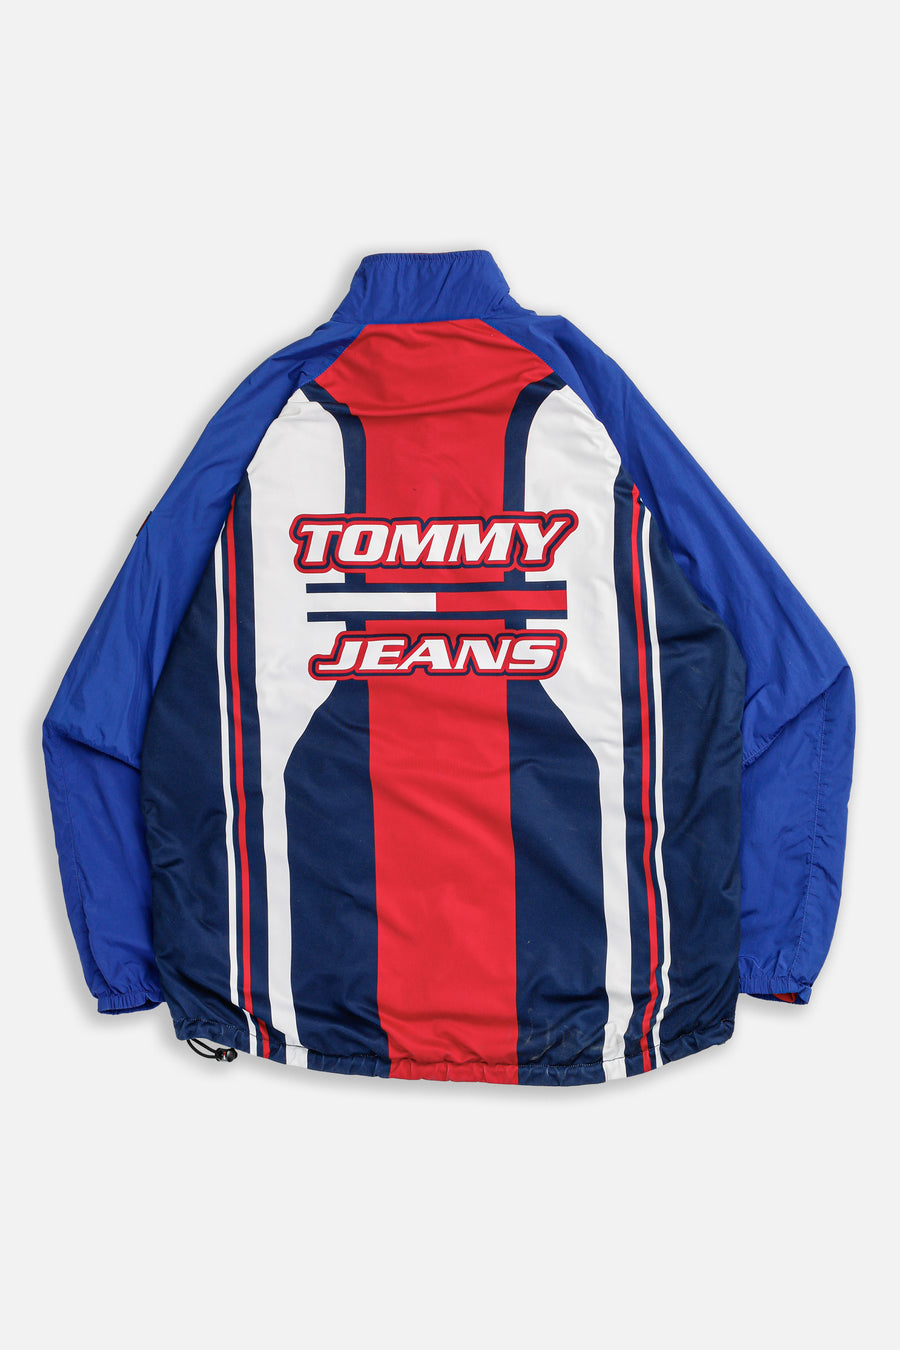 Vintage Tommy Windbreaker Jacket - M